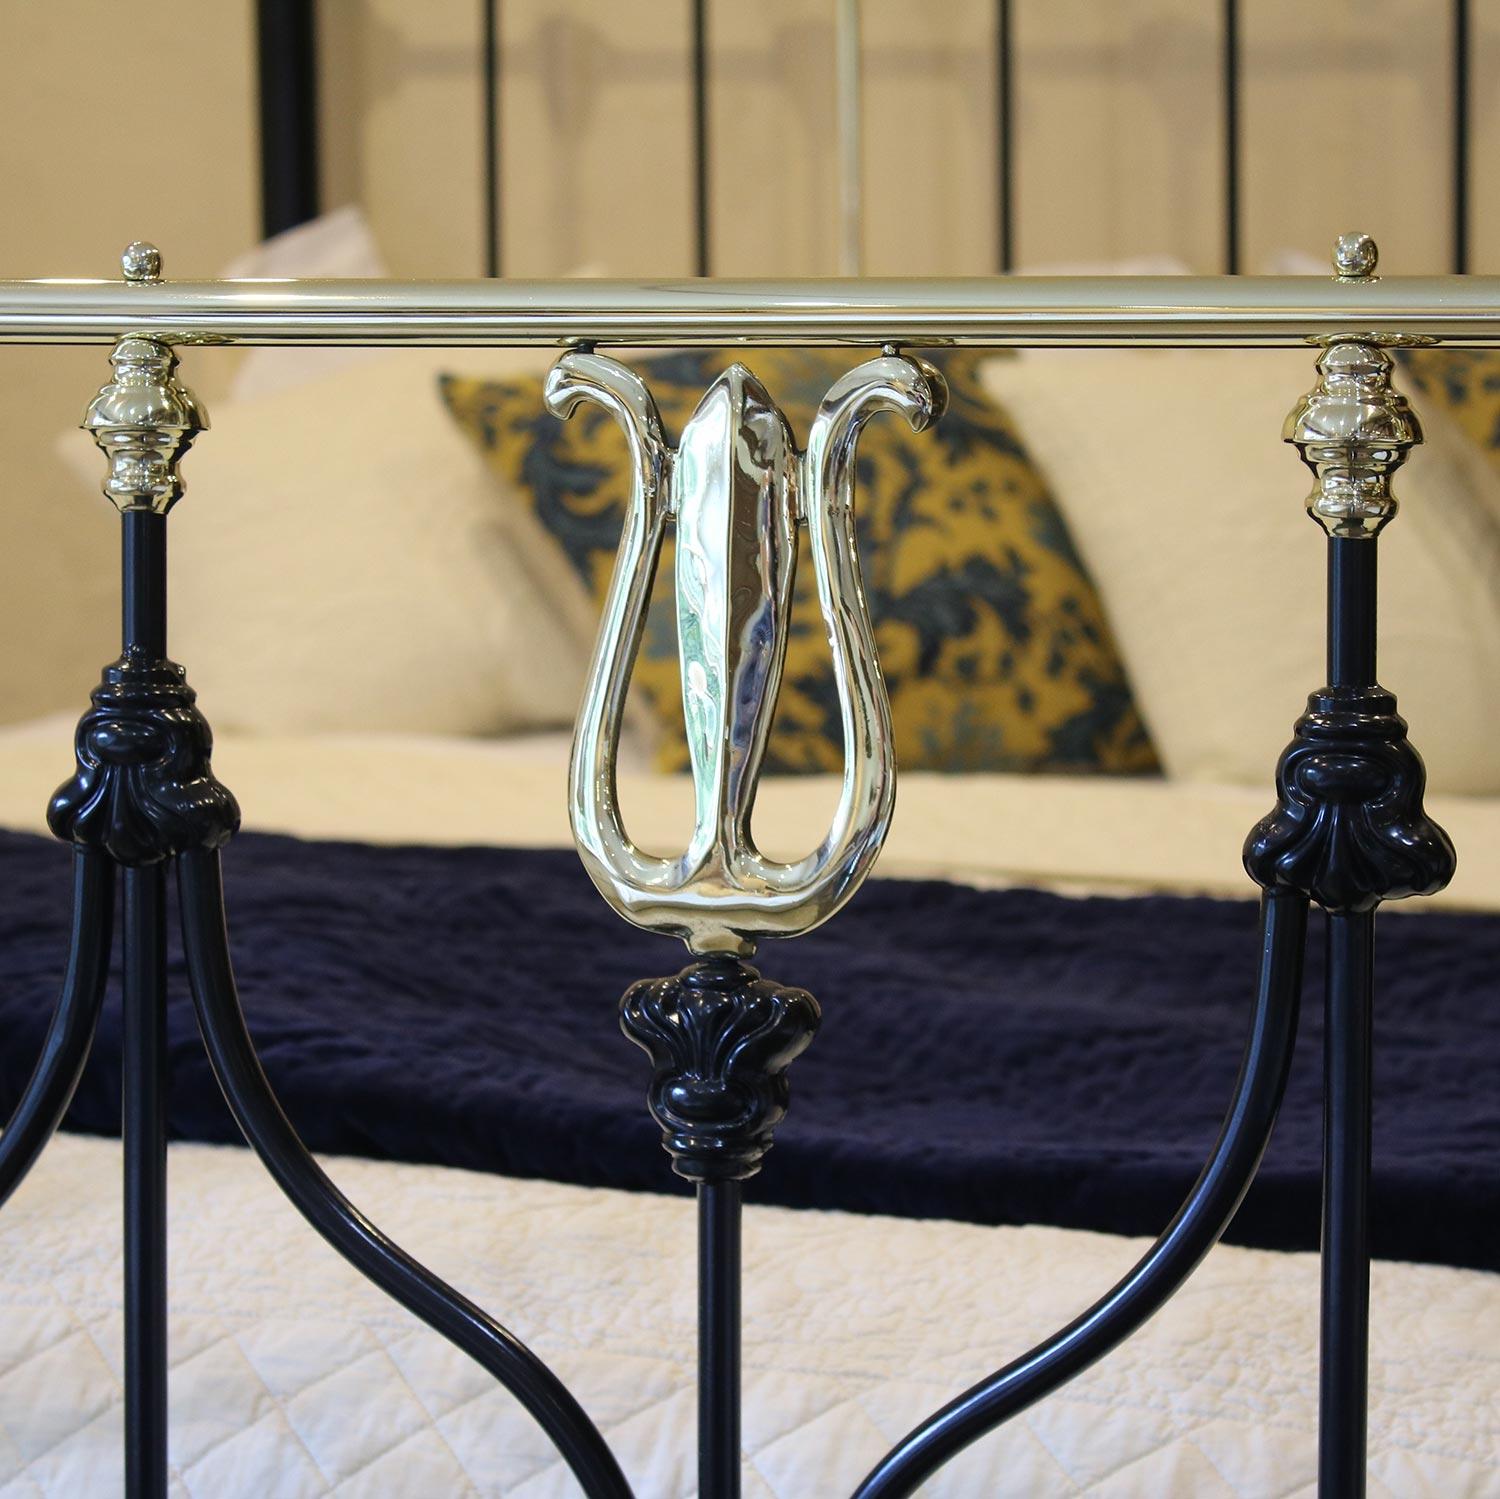 British Art Nouveau Brass and Iron Bed MK152